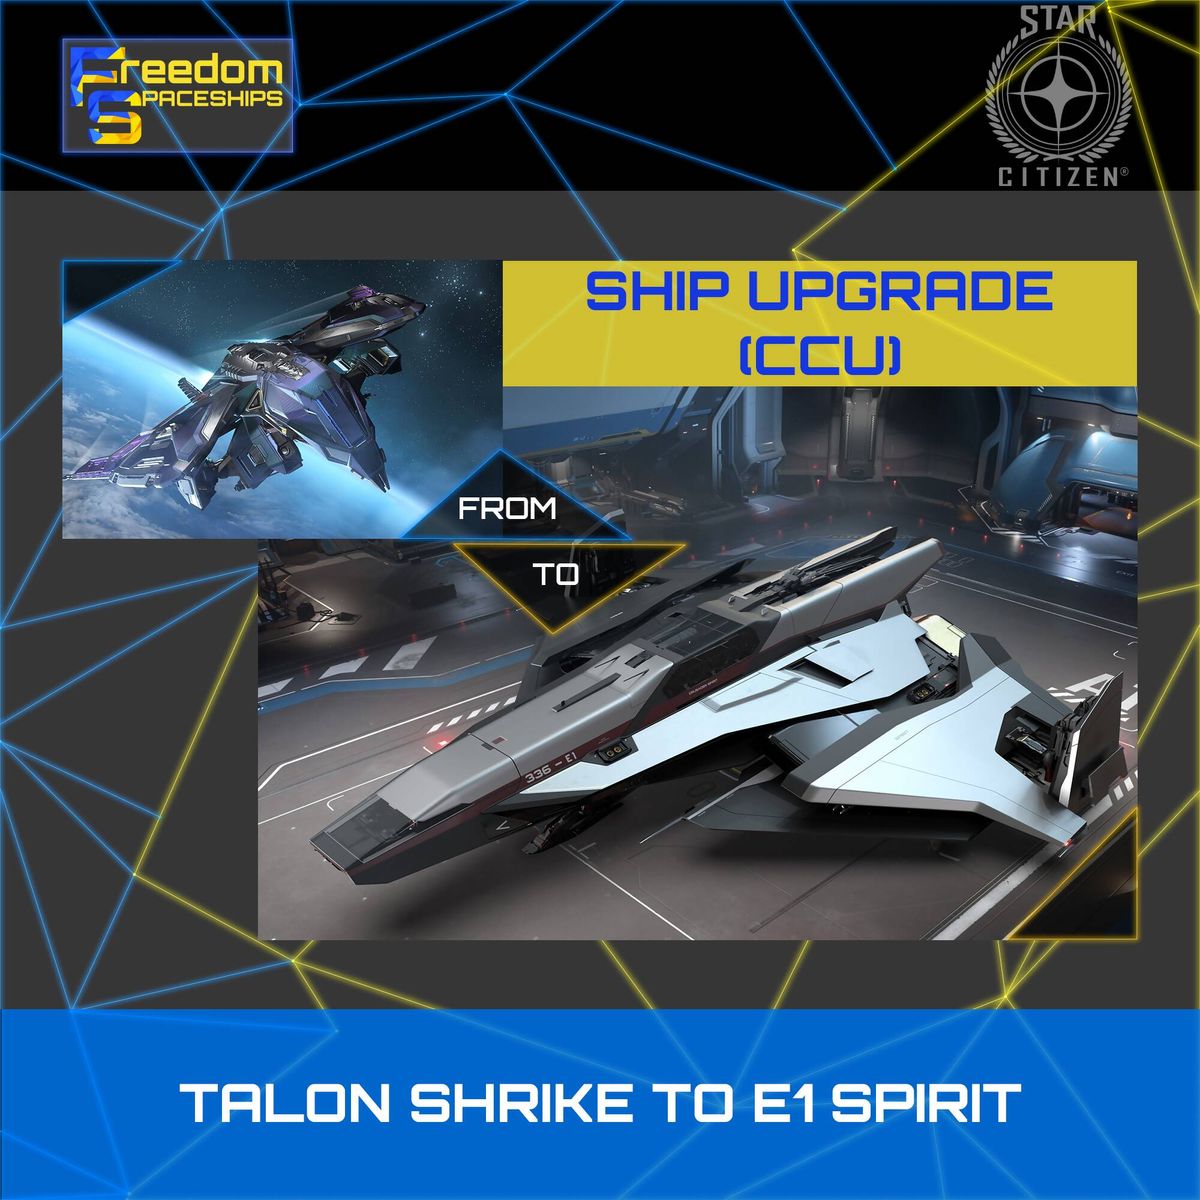 Upgrade - Talon Shrike to E1 Spirit